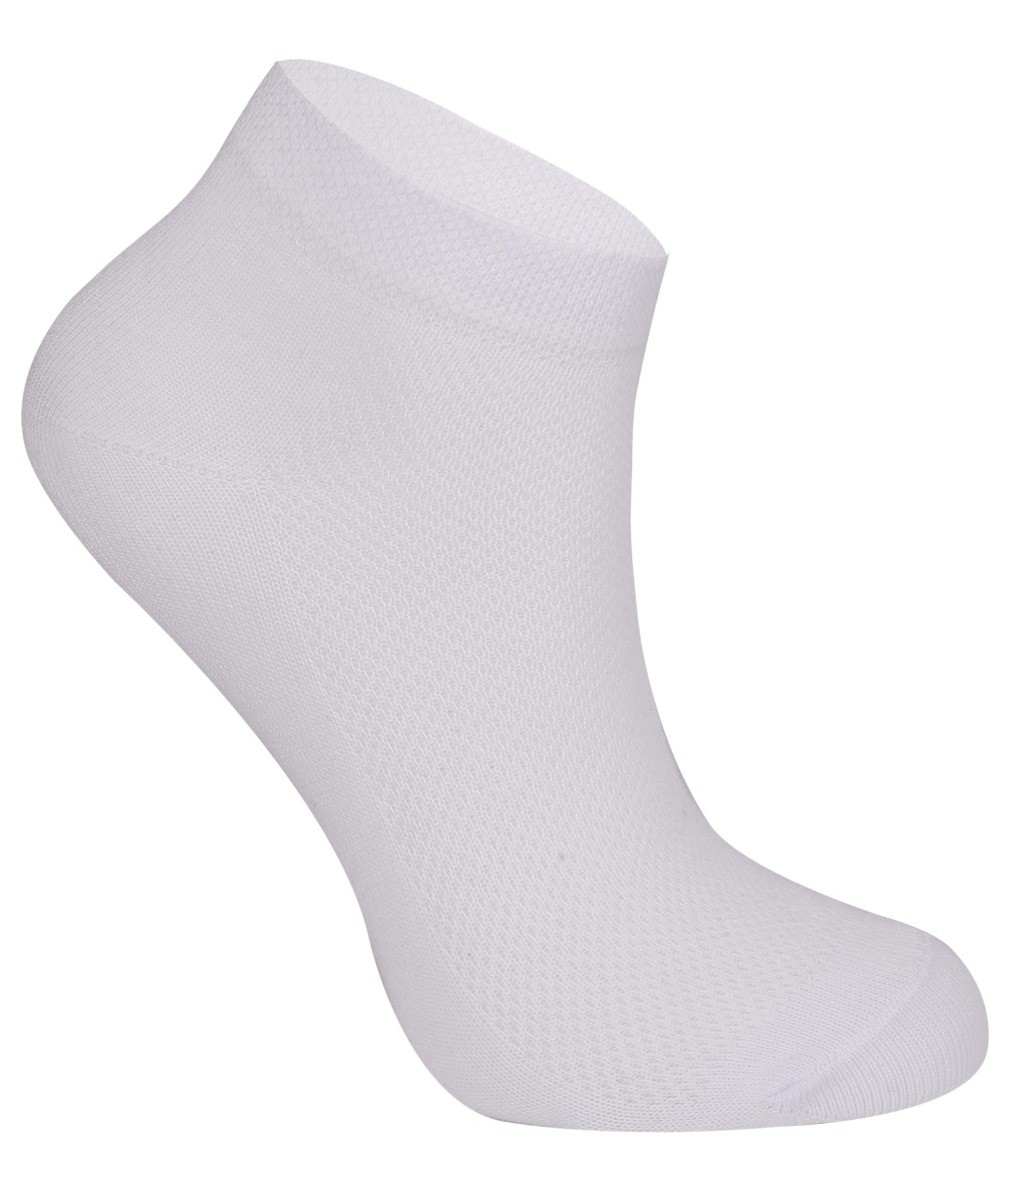 Unisex Stretch Cotton Ankle Socks, for Boys & Girls - White